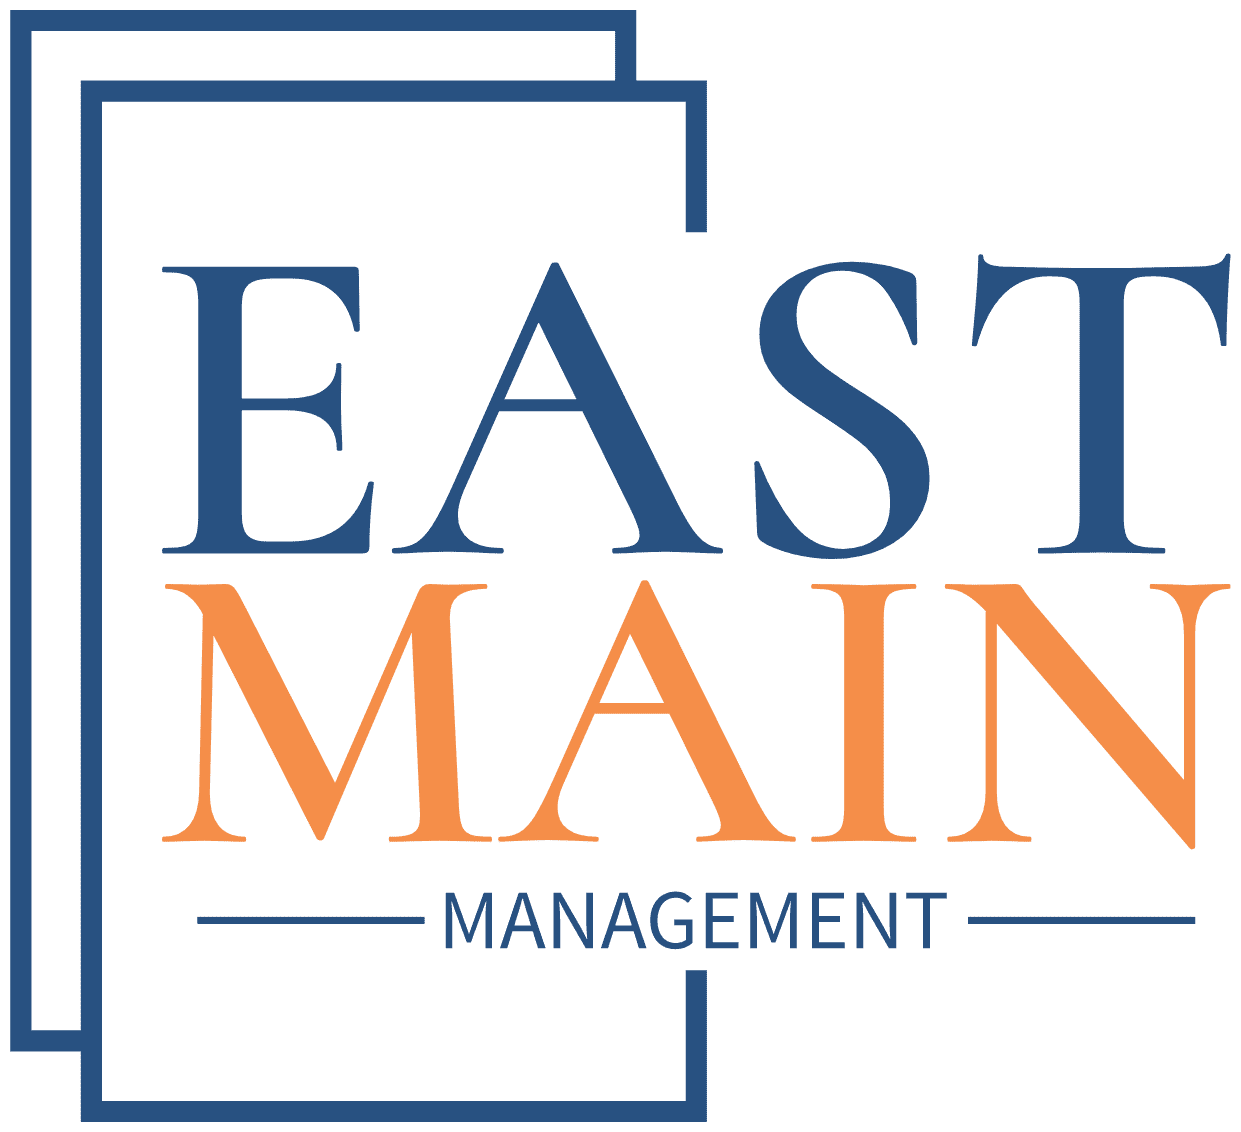 East Main Management